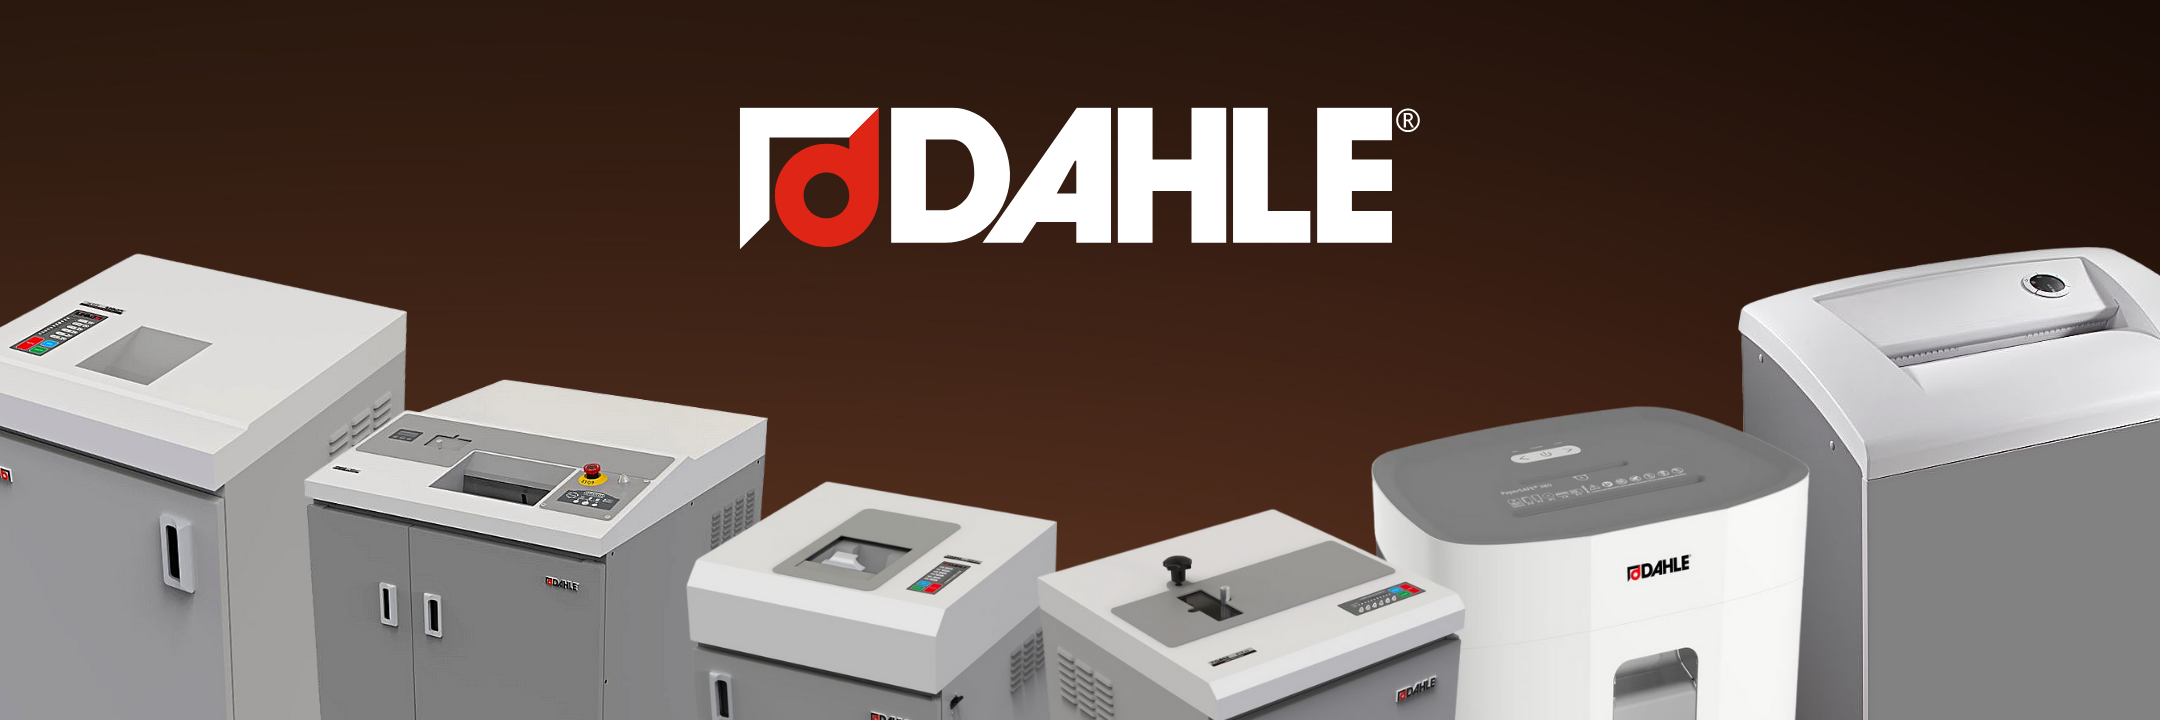 Dahle-Shredders-Carousal-Desktop-USA